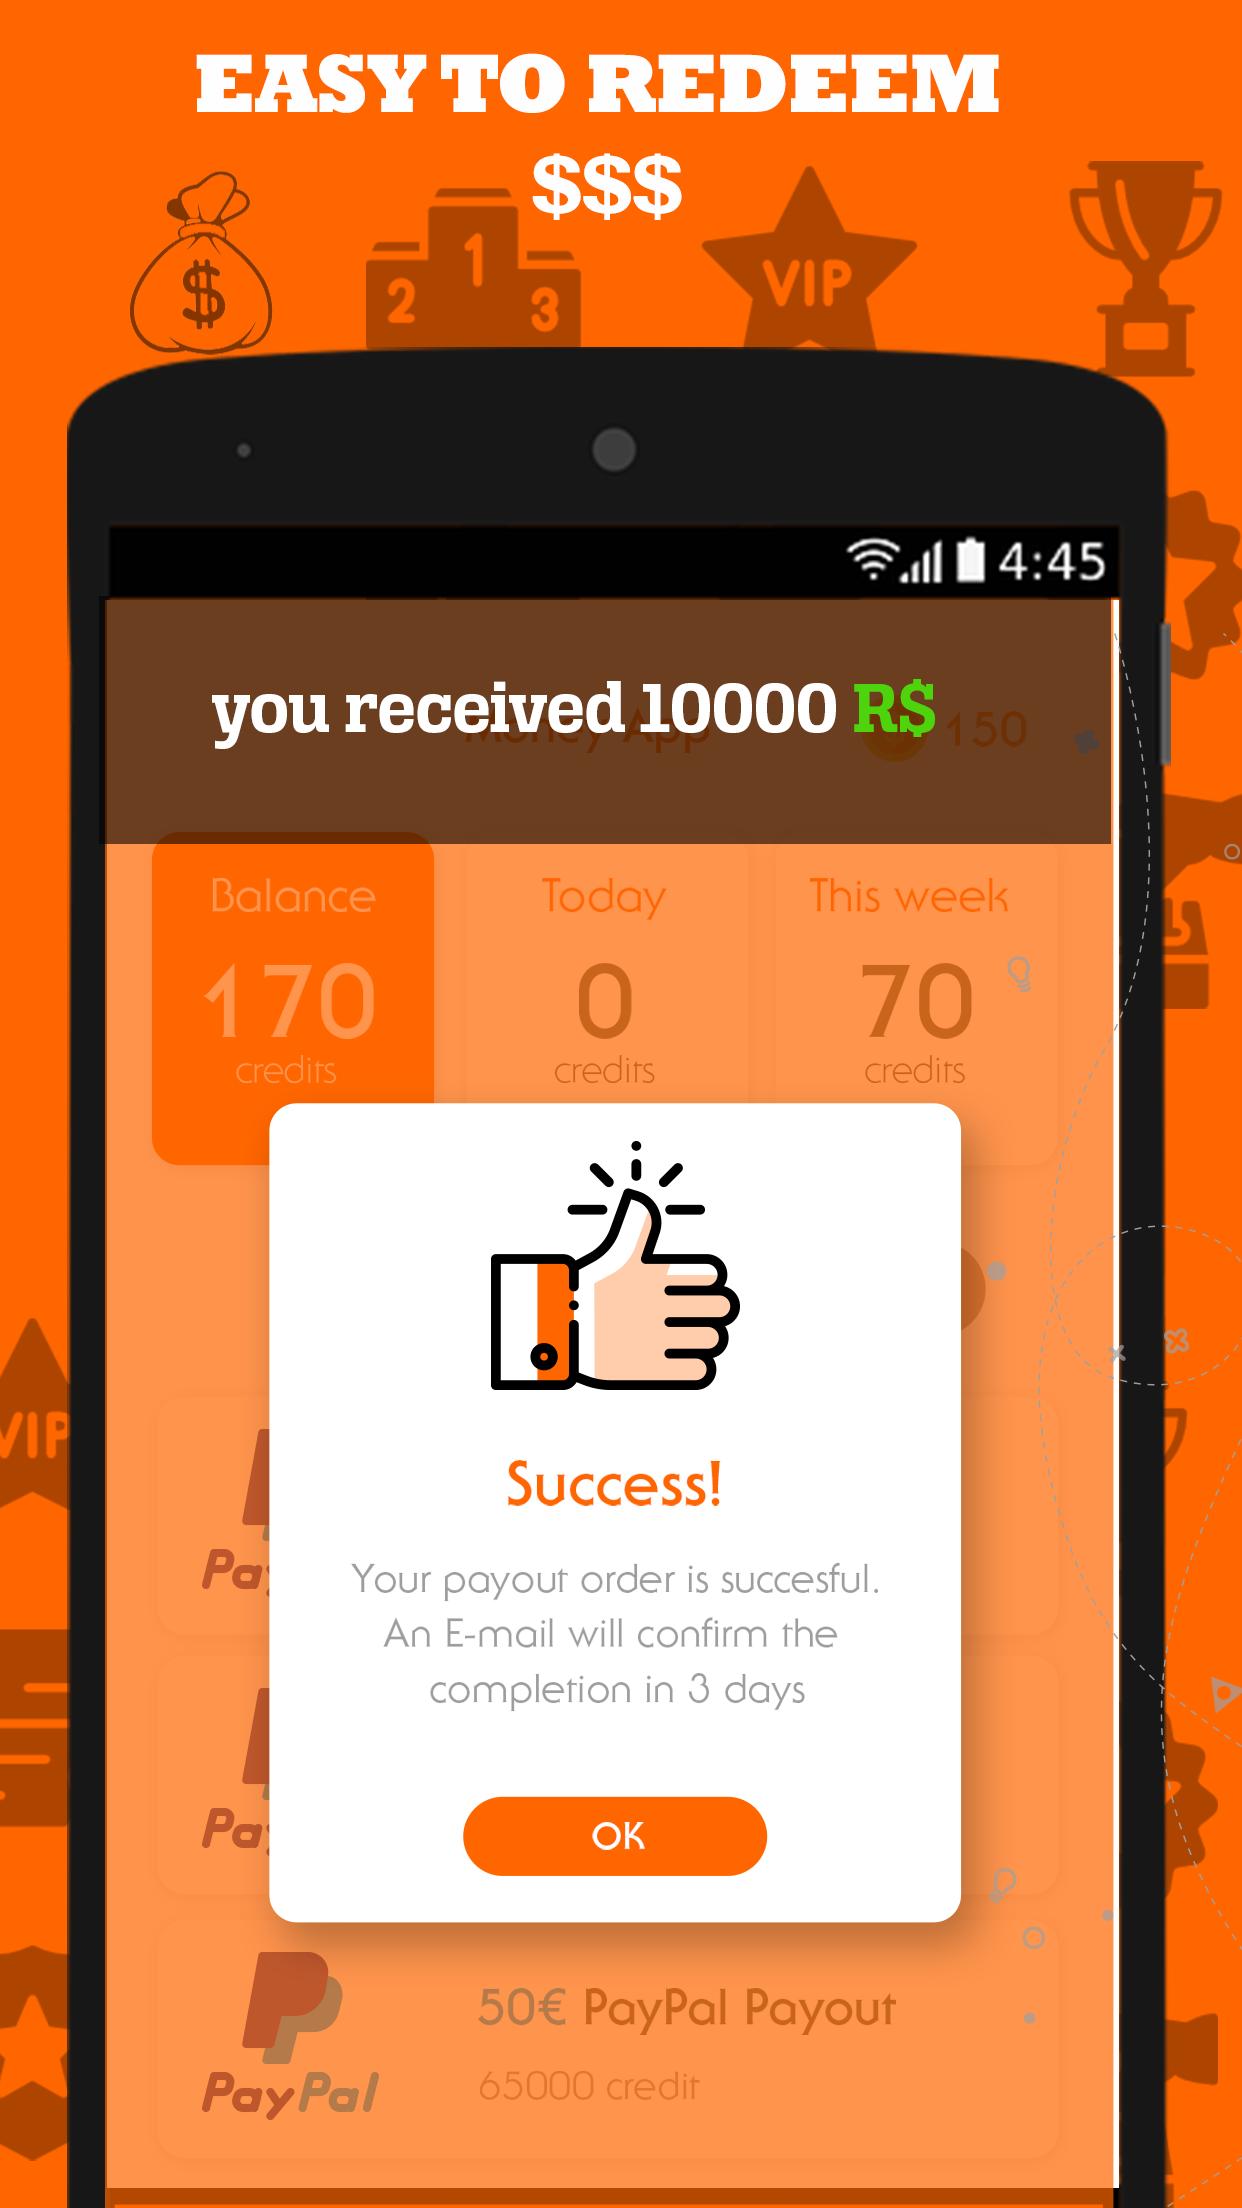 Bloxdude Get Rbx Credits For Android Apk Download - rbx cash .com